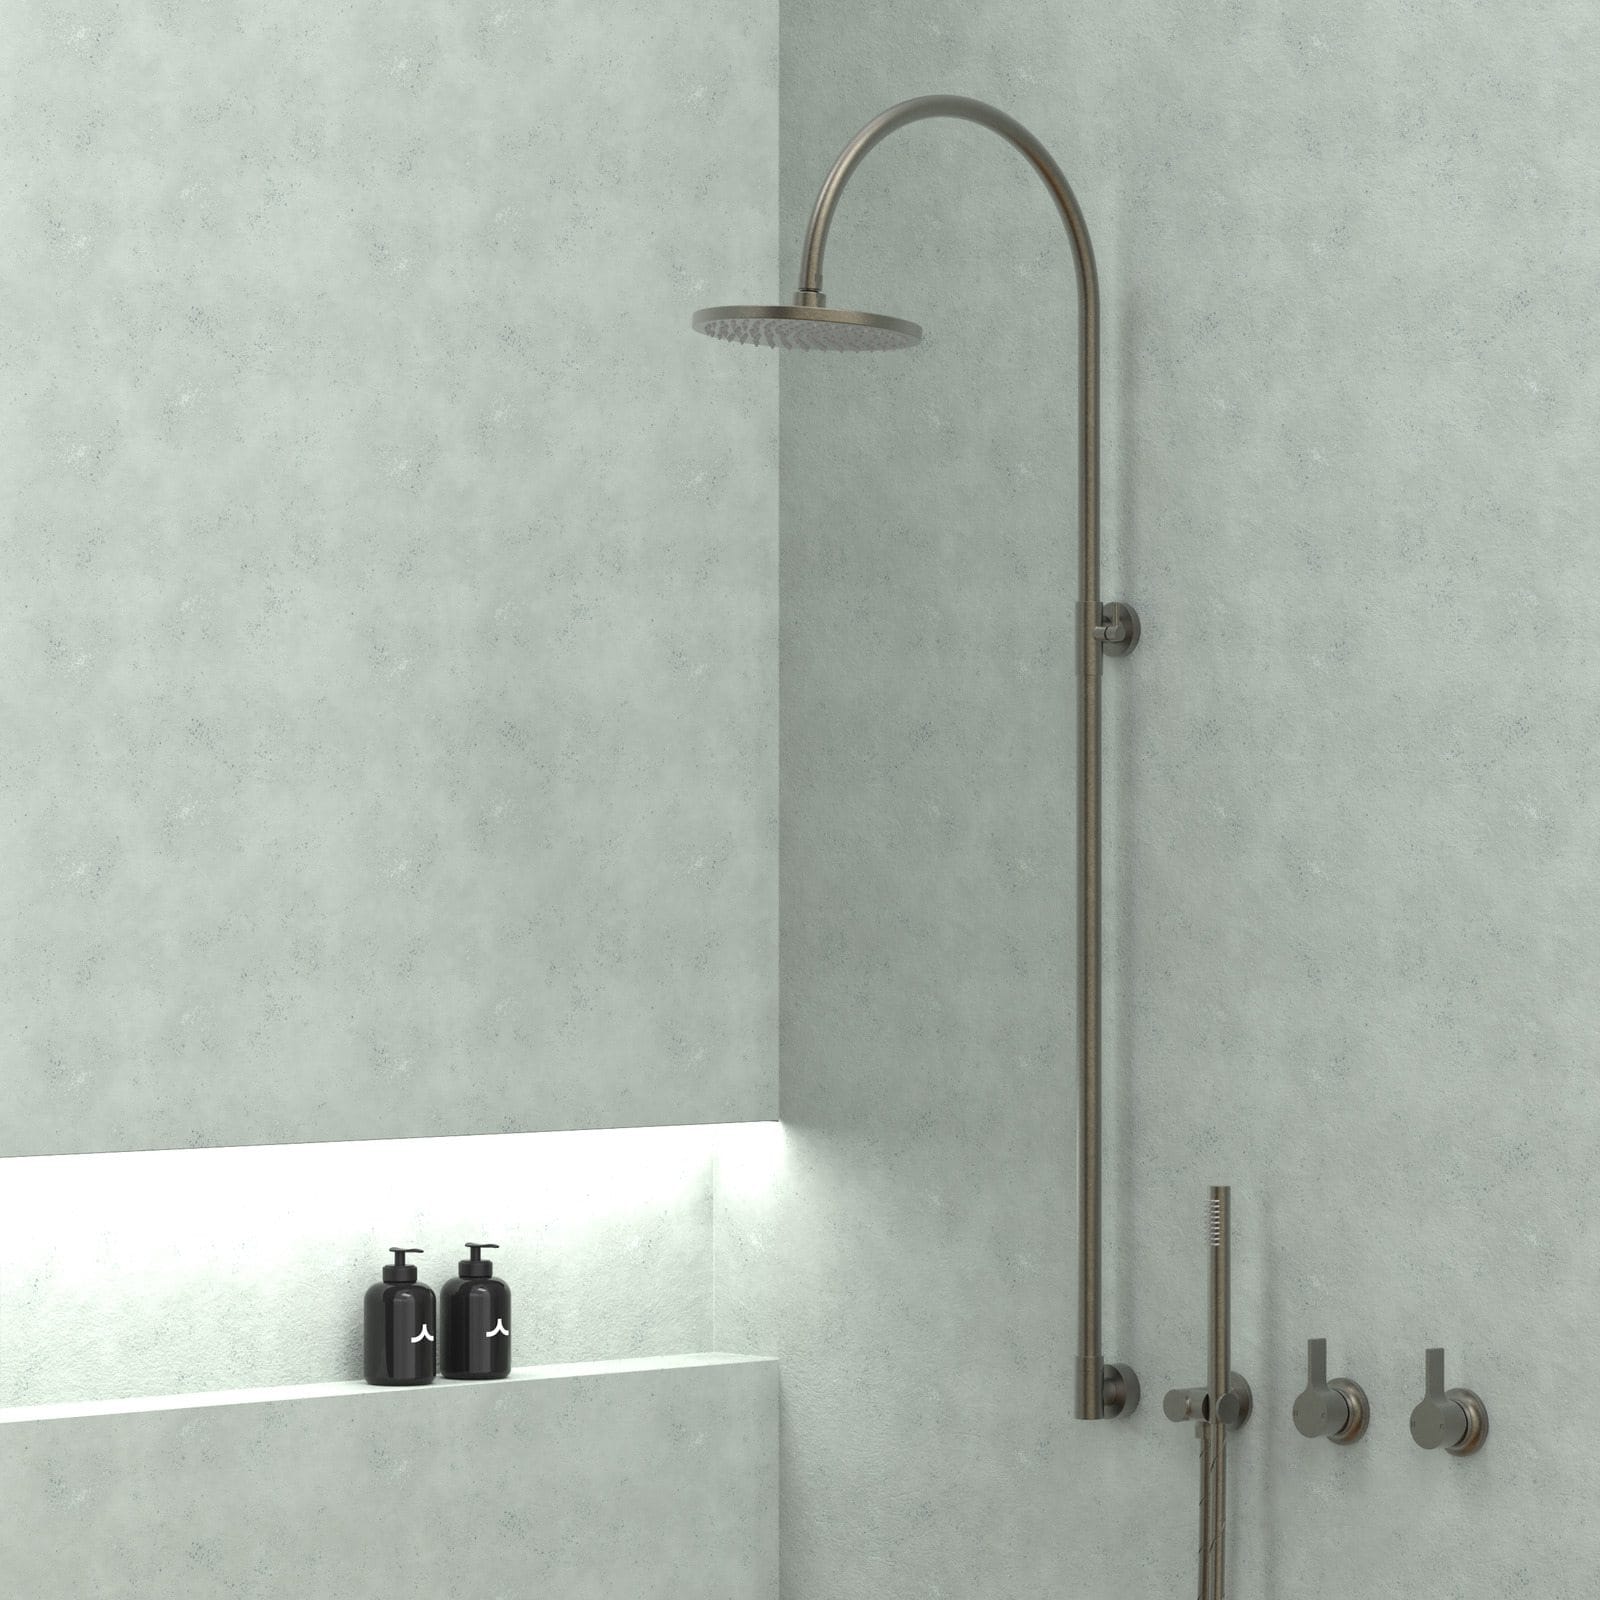 PAR TAPS. Copyright of PAR TAPS. Render of minimalistic shower with chrome showerhead and fixtures. 